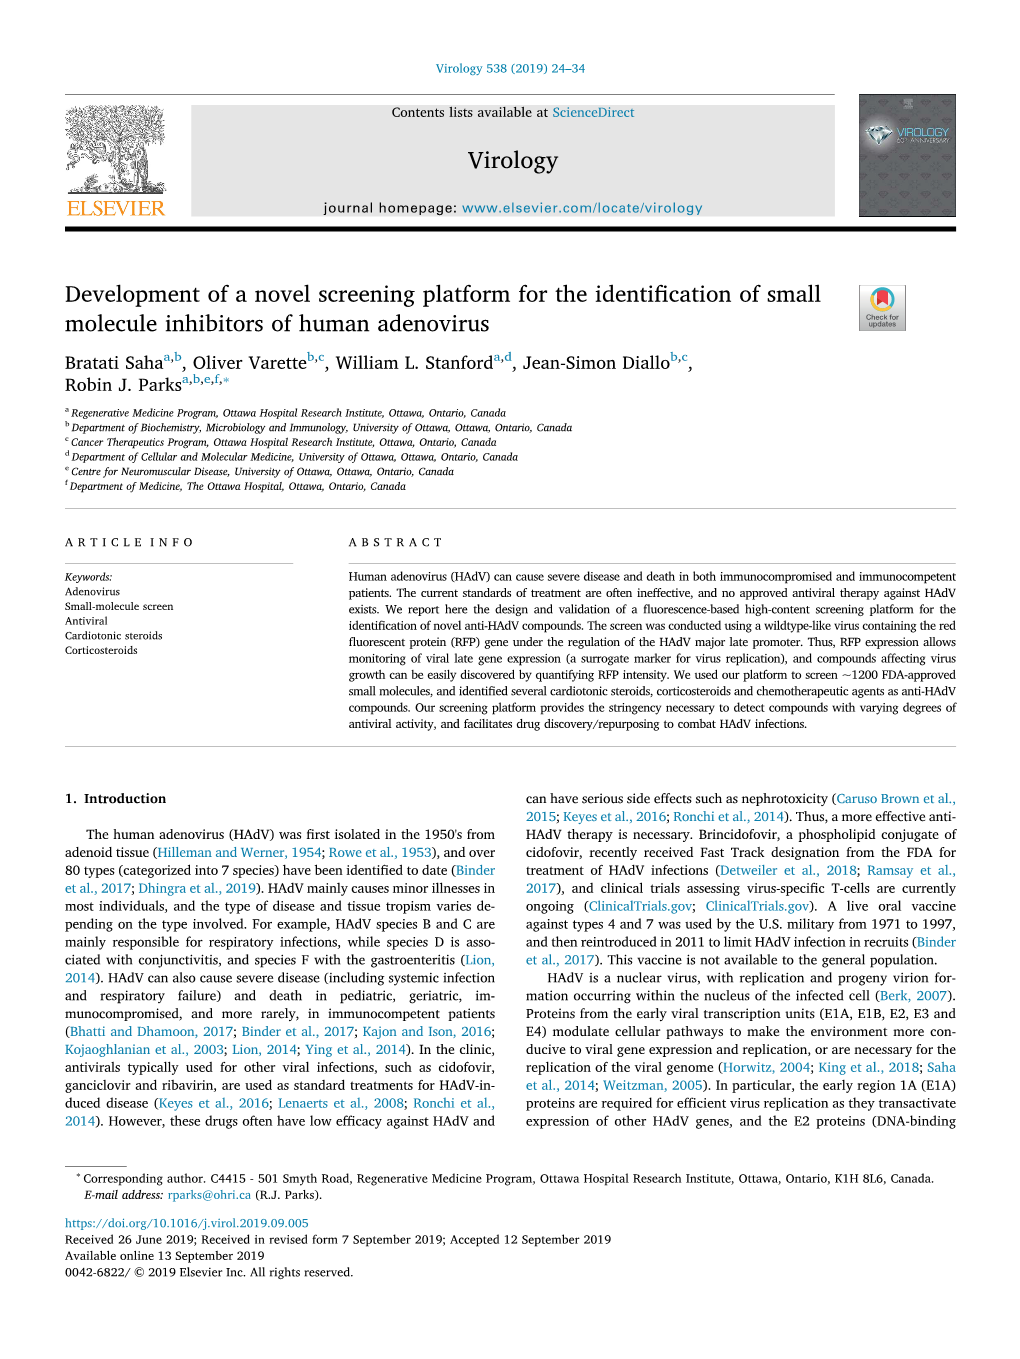 Development of a Novel Screening Platform for the Identification of Small T Molecule Inhibitors of Human Adenovirus Bratati Sahaa,B, Oliver Varetteb,C, William L